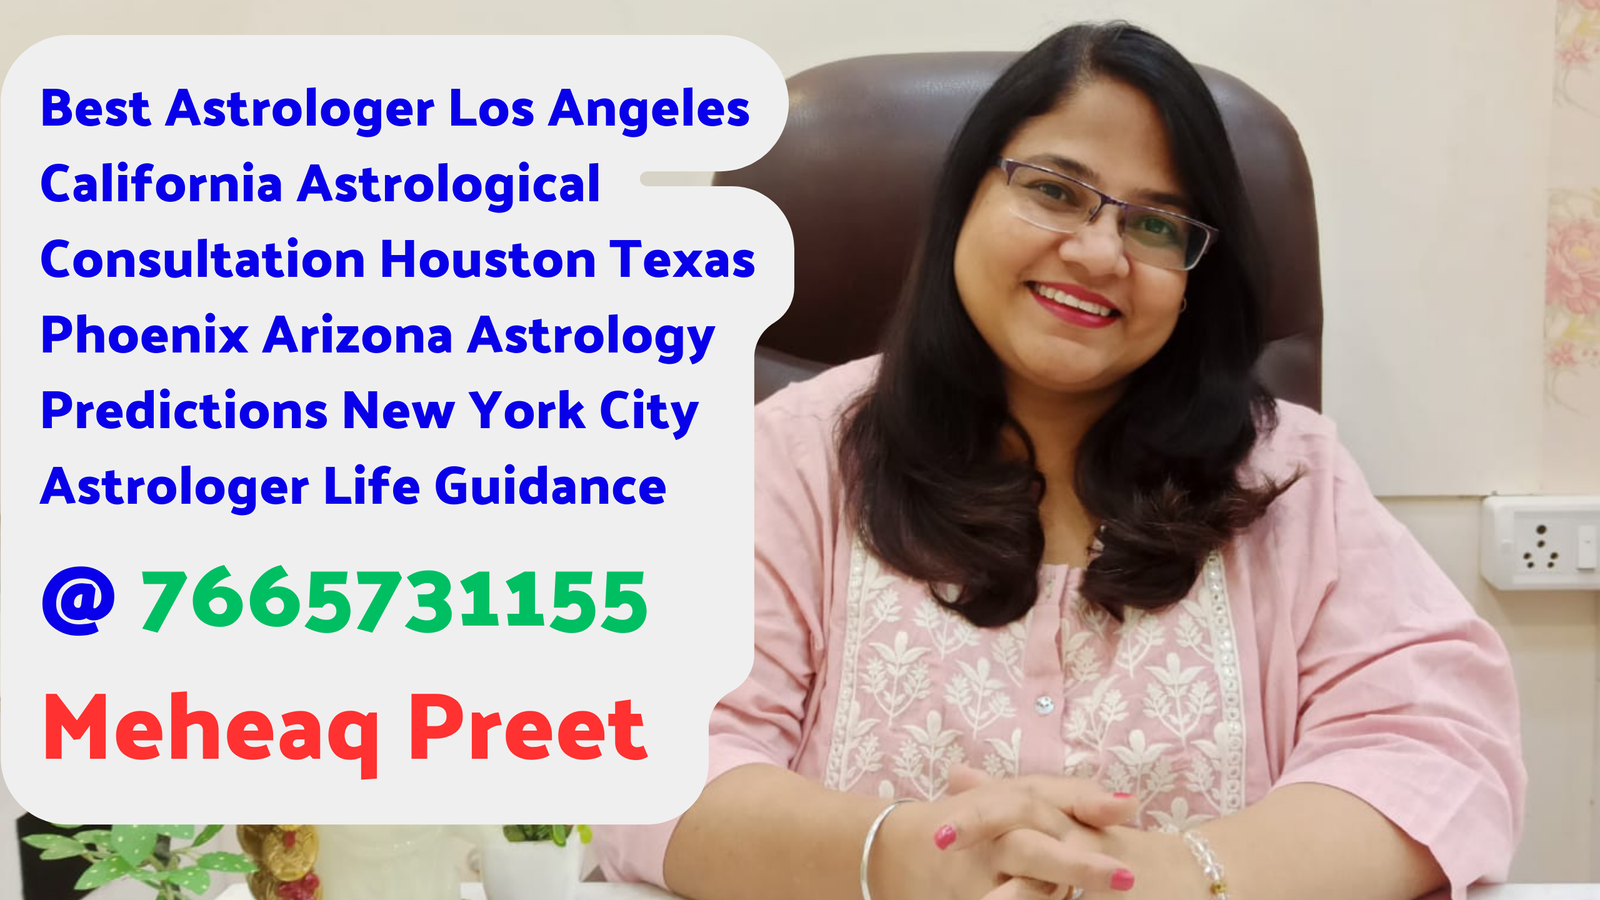 Best Astrologer Los Angeles California Astrological Consultation Houston Texas Phoenix Arizona Astrology Predictions New York City Astrologer Life Guidance